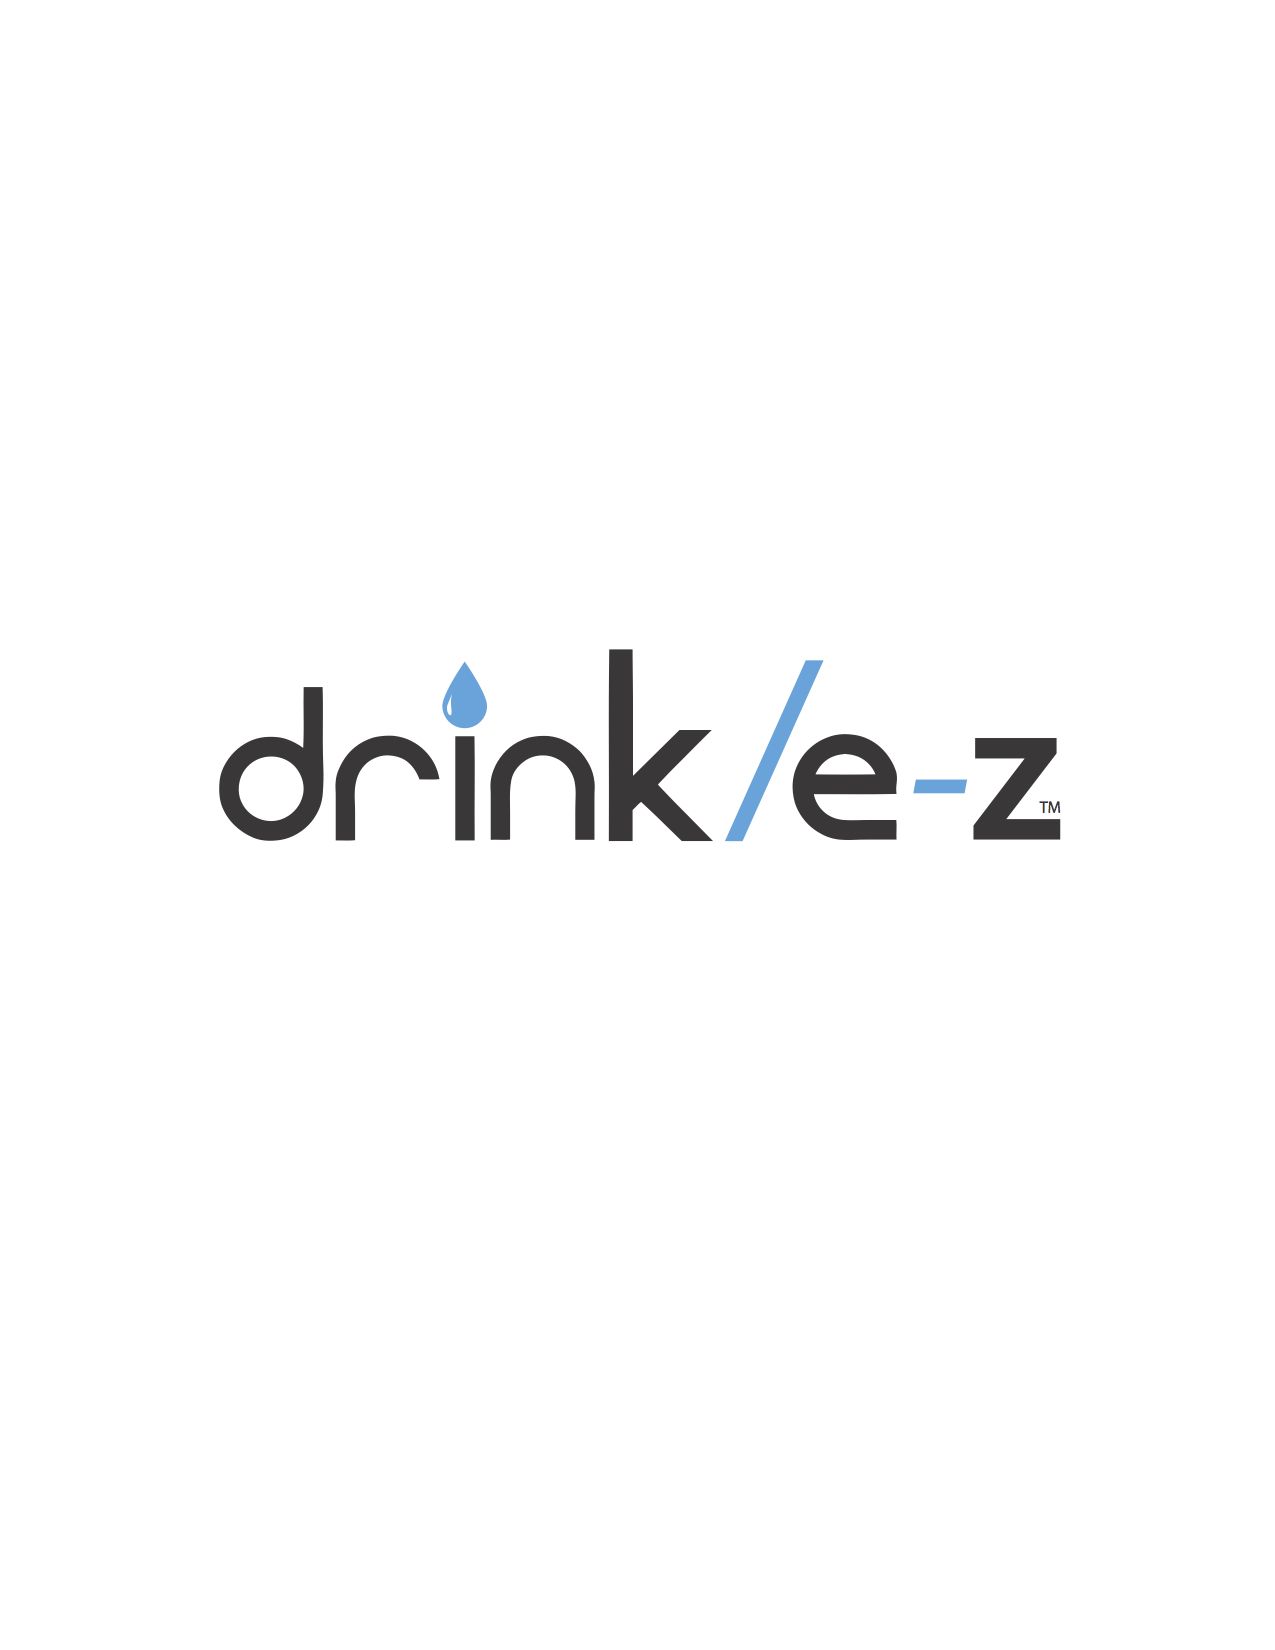 drinke-z Logo